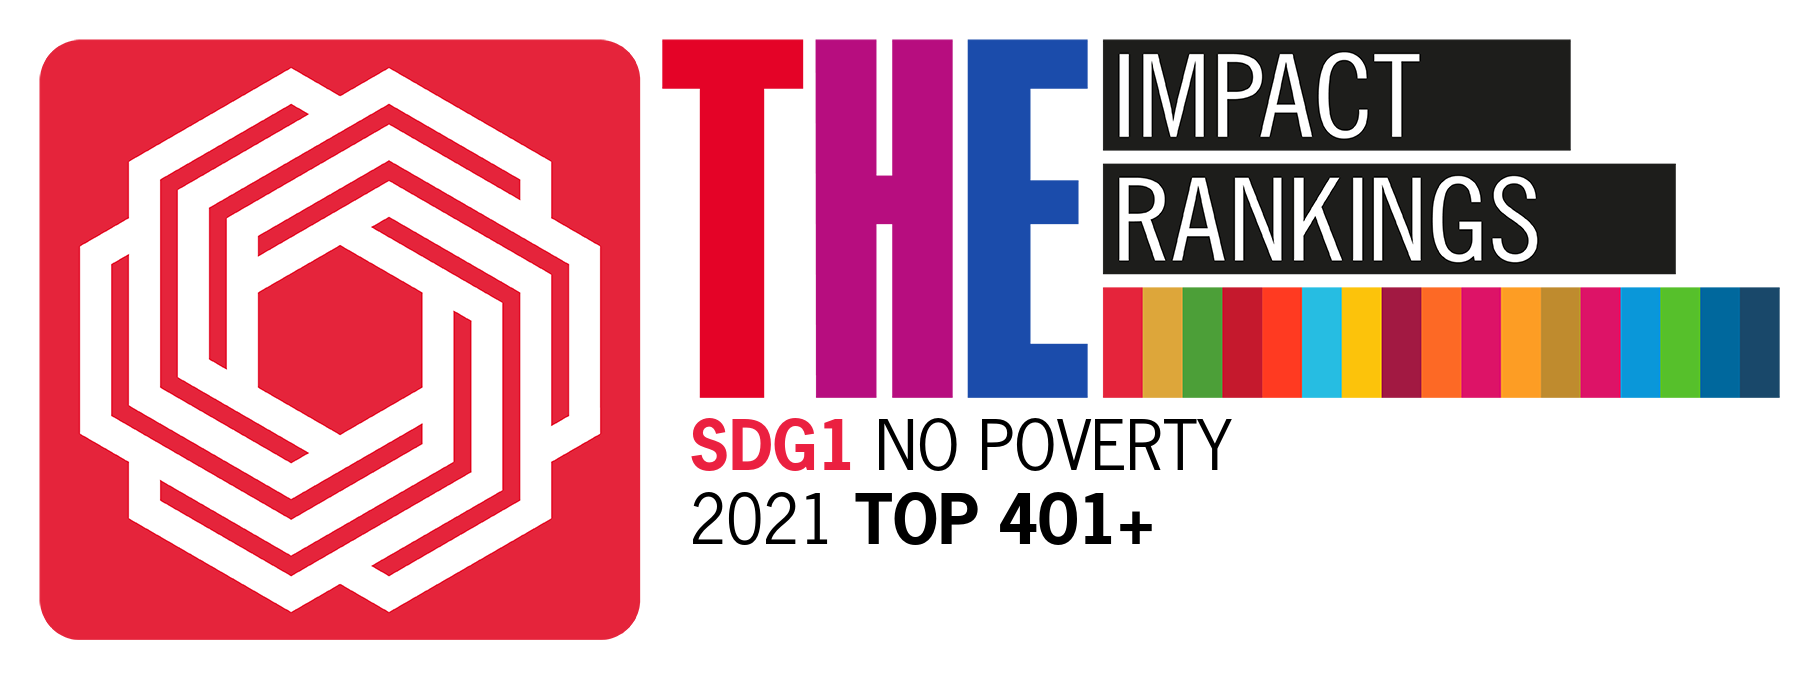 SDG1_ No Poverty - Top 401+